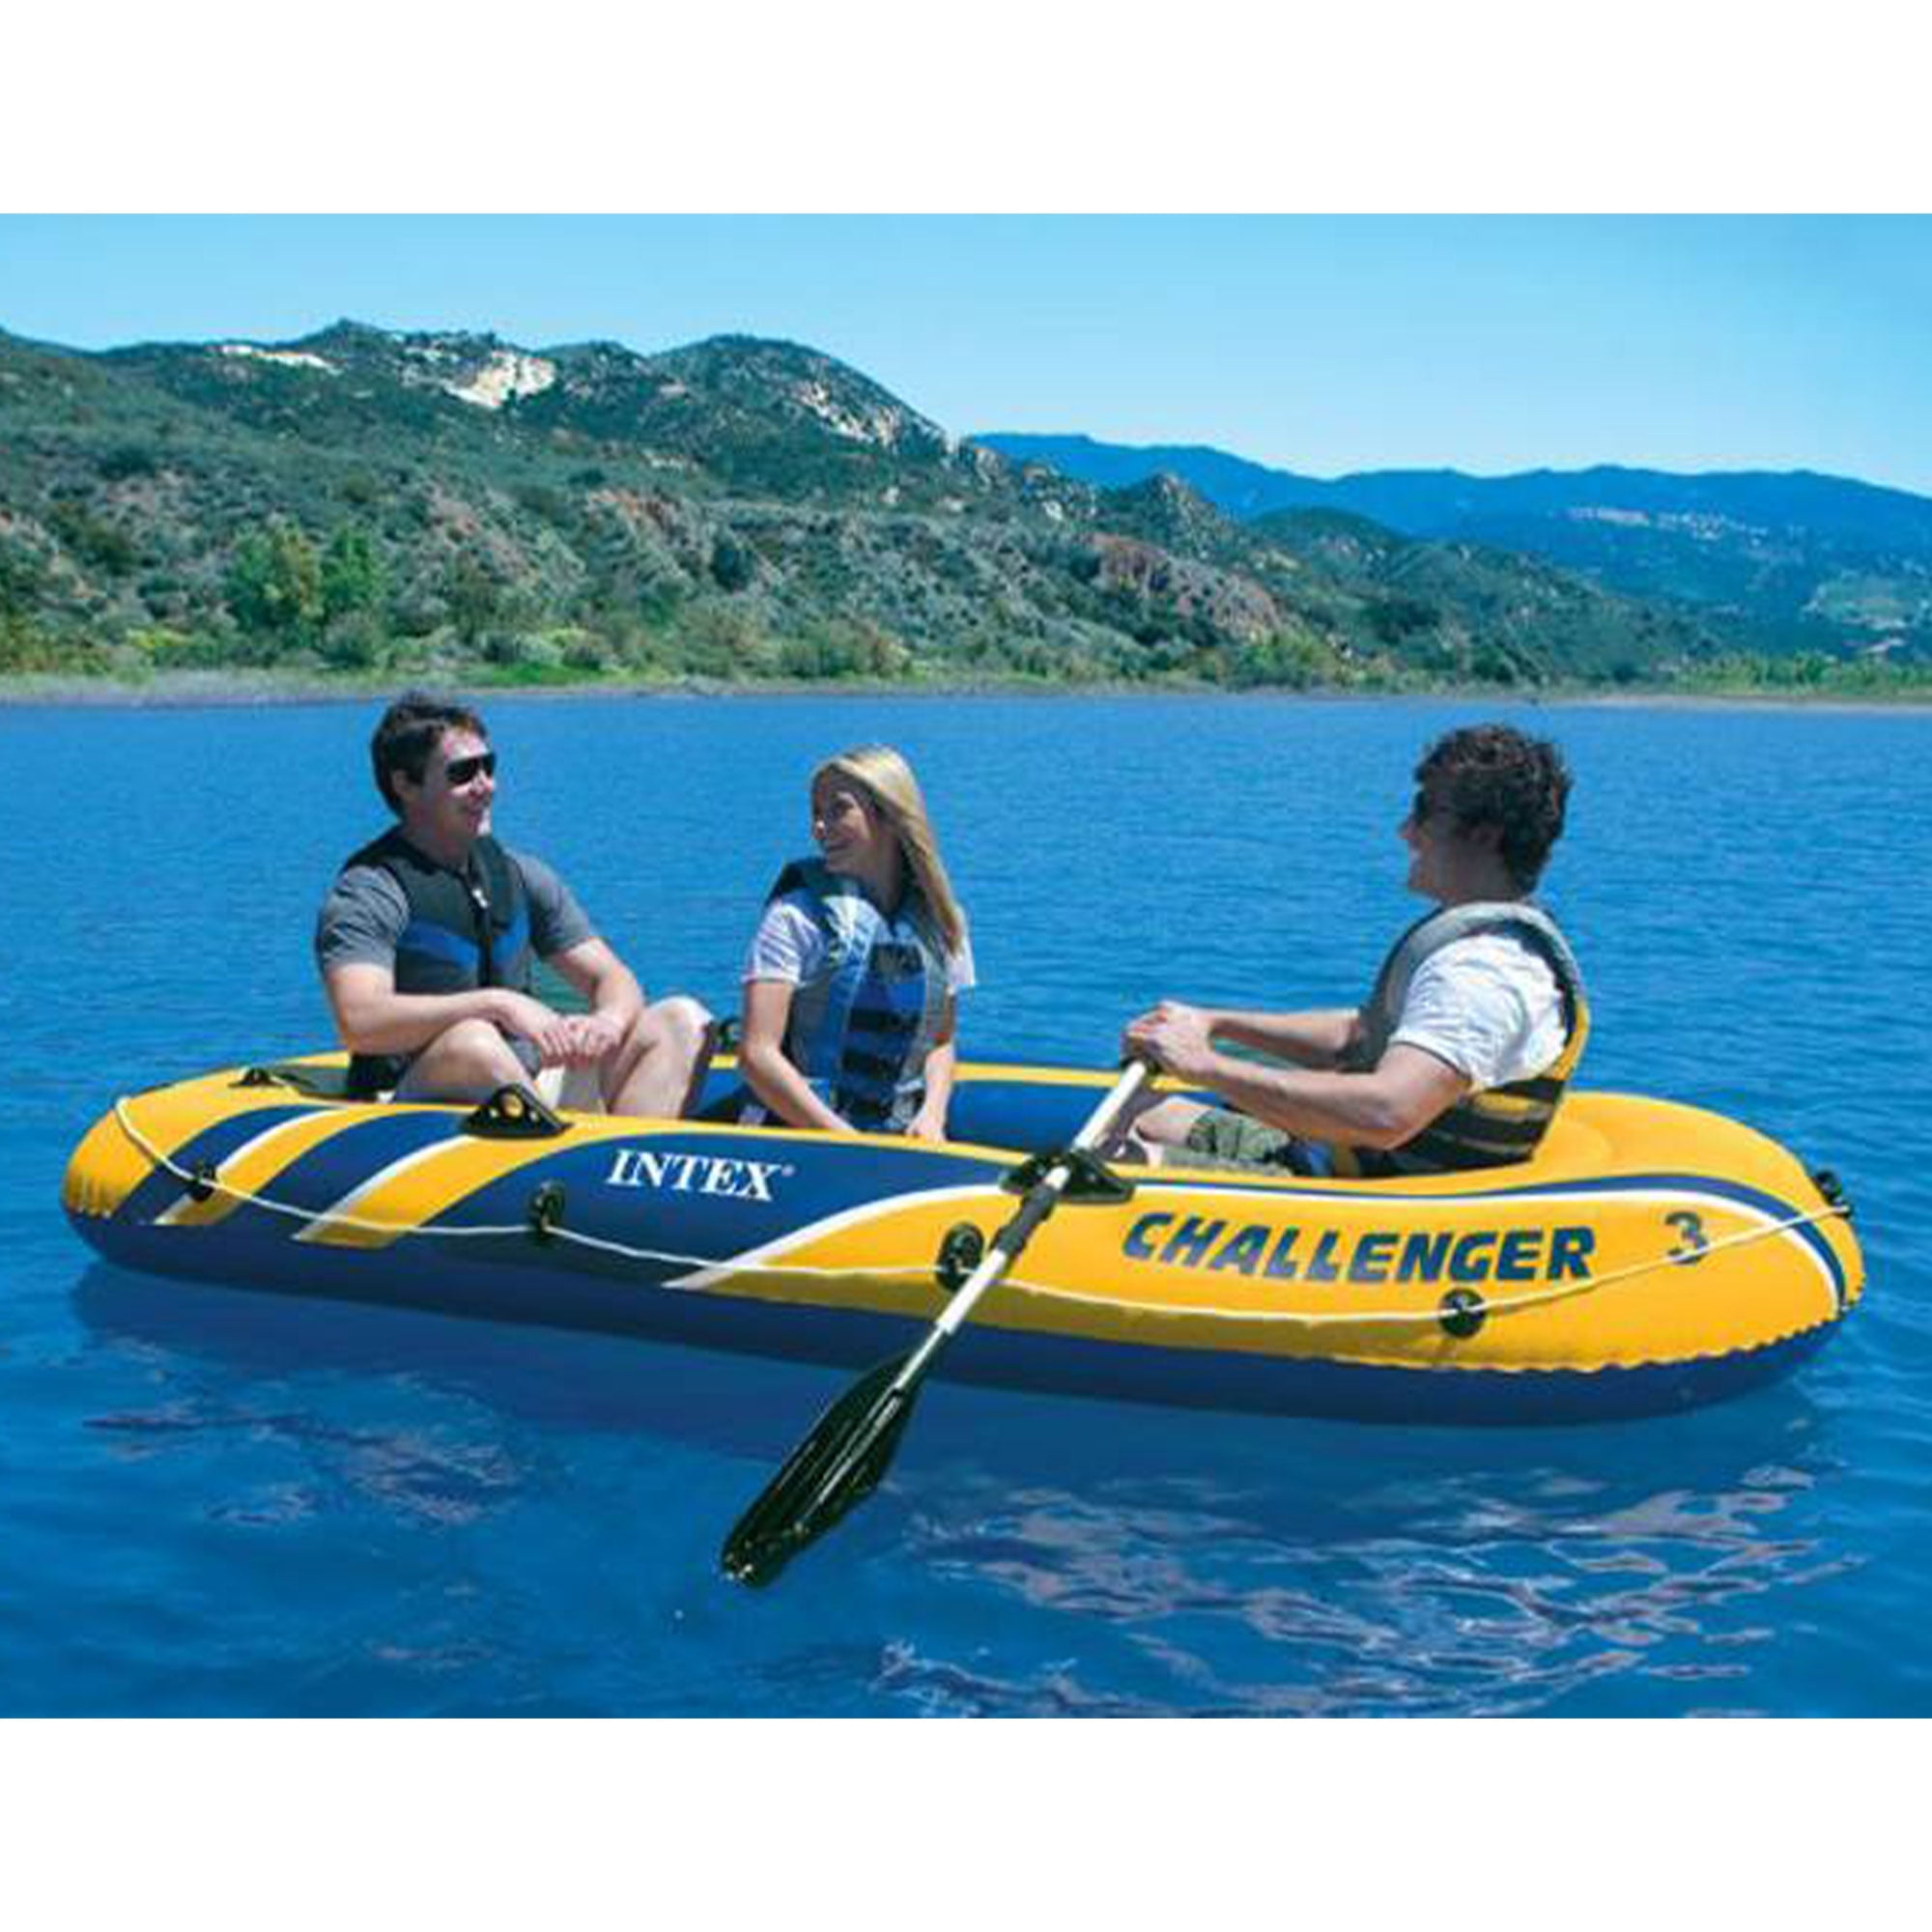 Barca hinchable Intex Challenger 3 - Outlet Piscinas